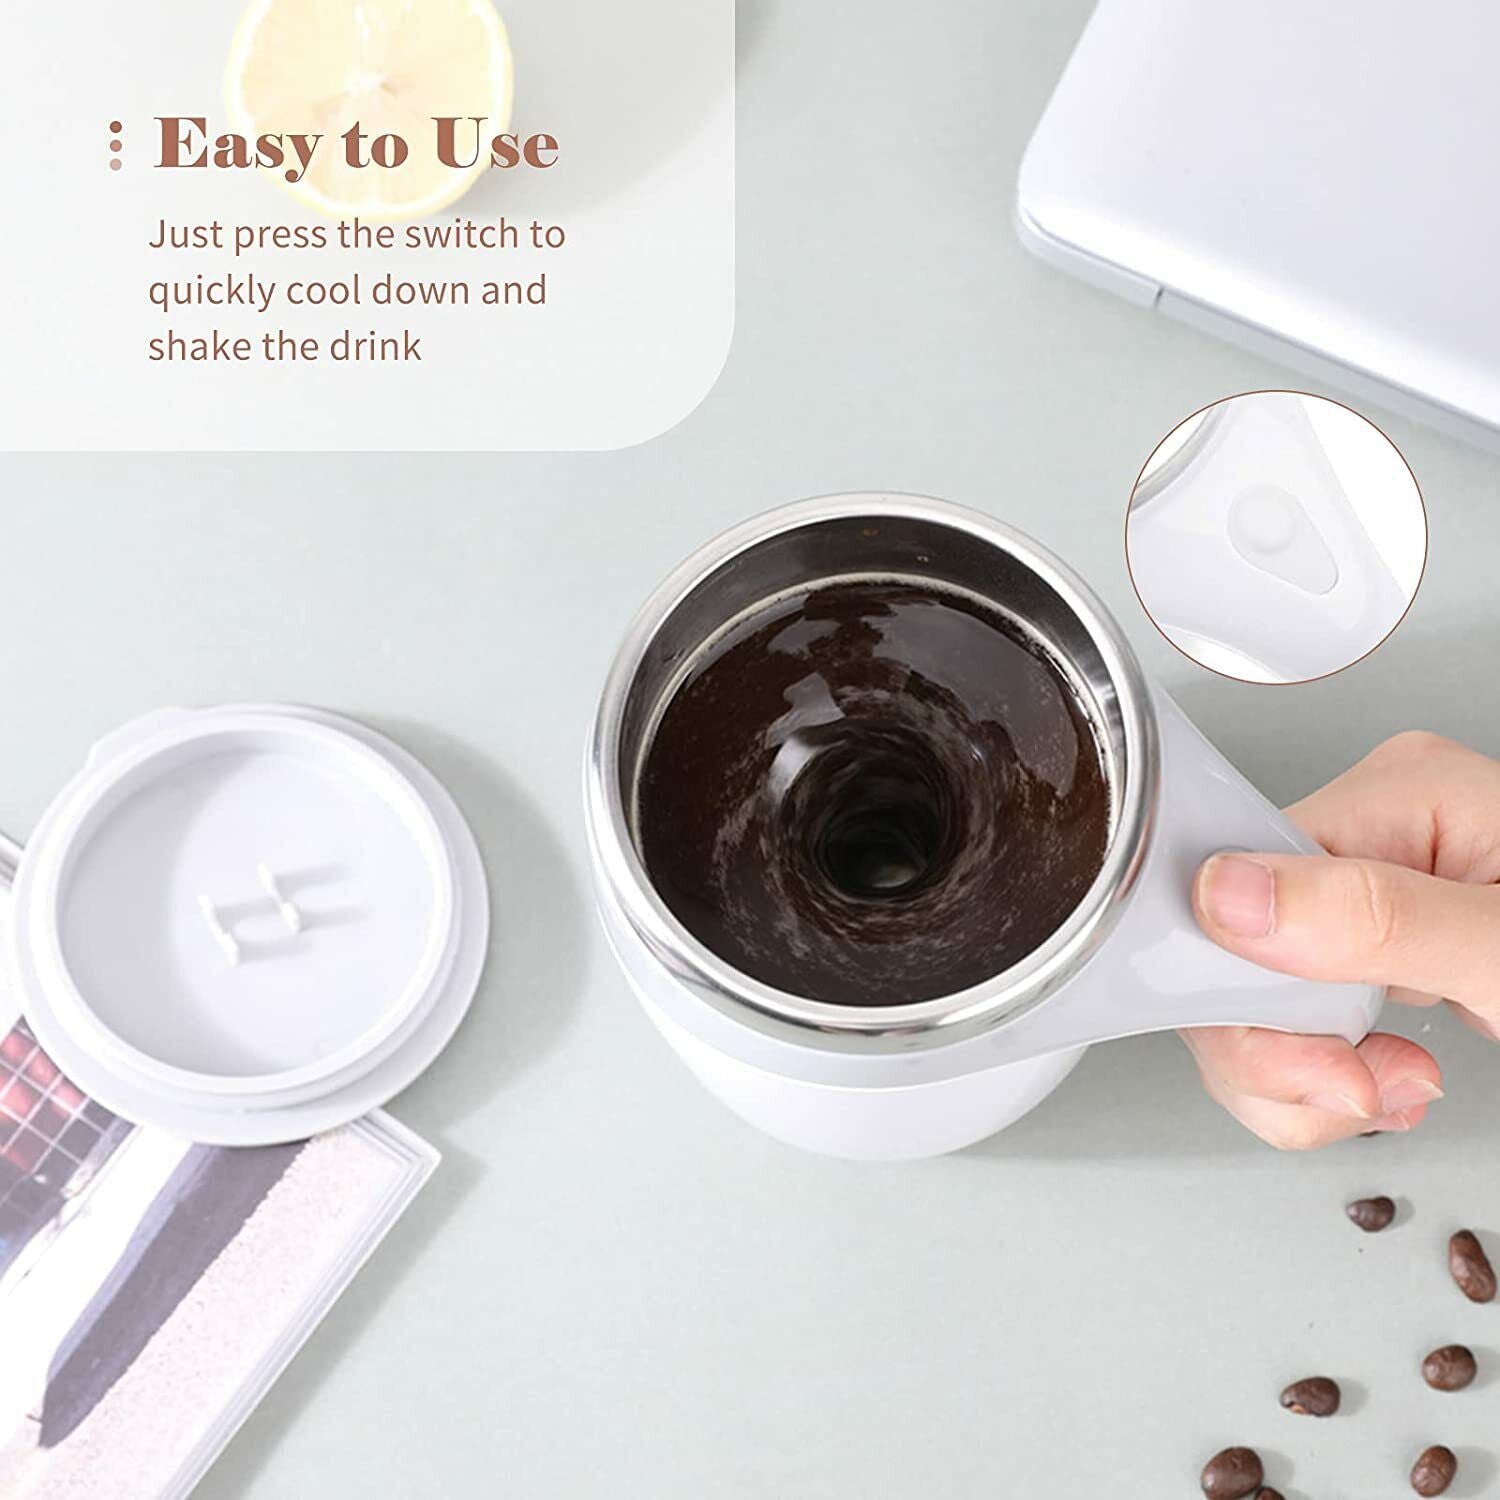 Self Stirring Mug Cup Auto Mixing Stir Coffee Milk Tea Beer Automatic Electric